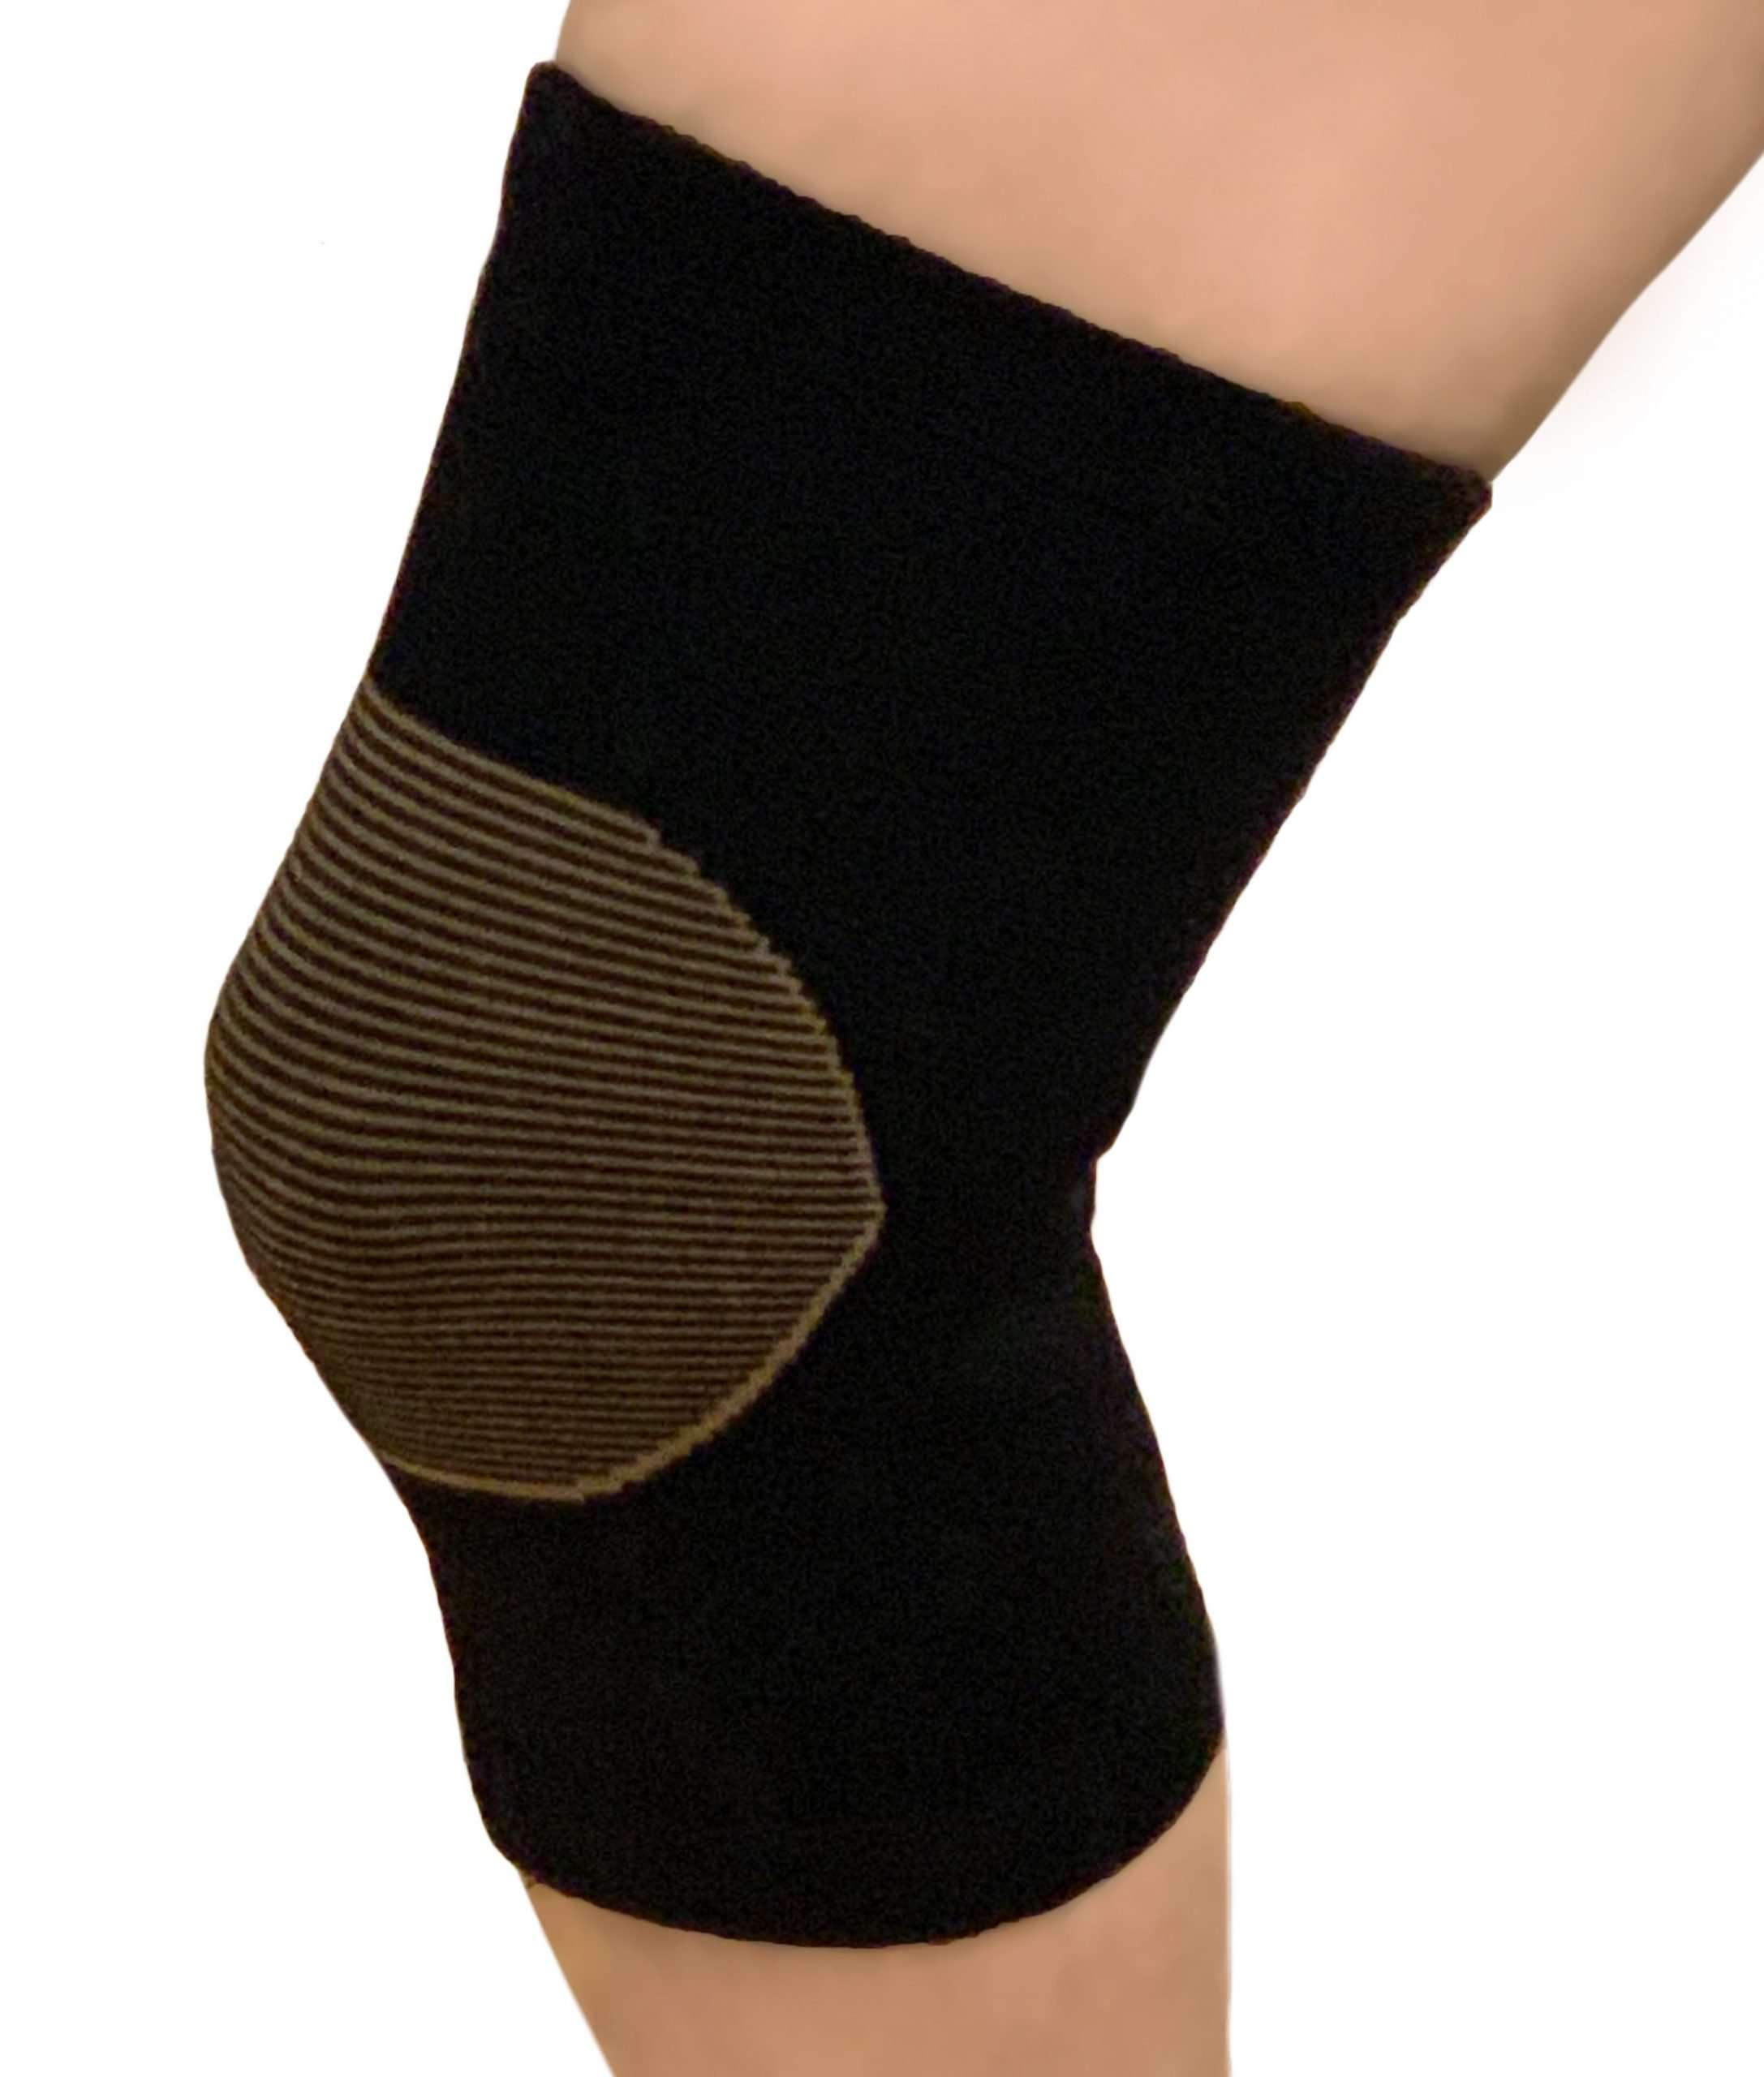 Knee Compression Sleeve (1 Pair) for Arthritis, Meniscus ...